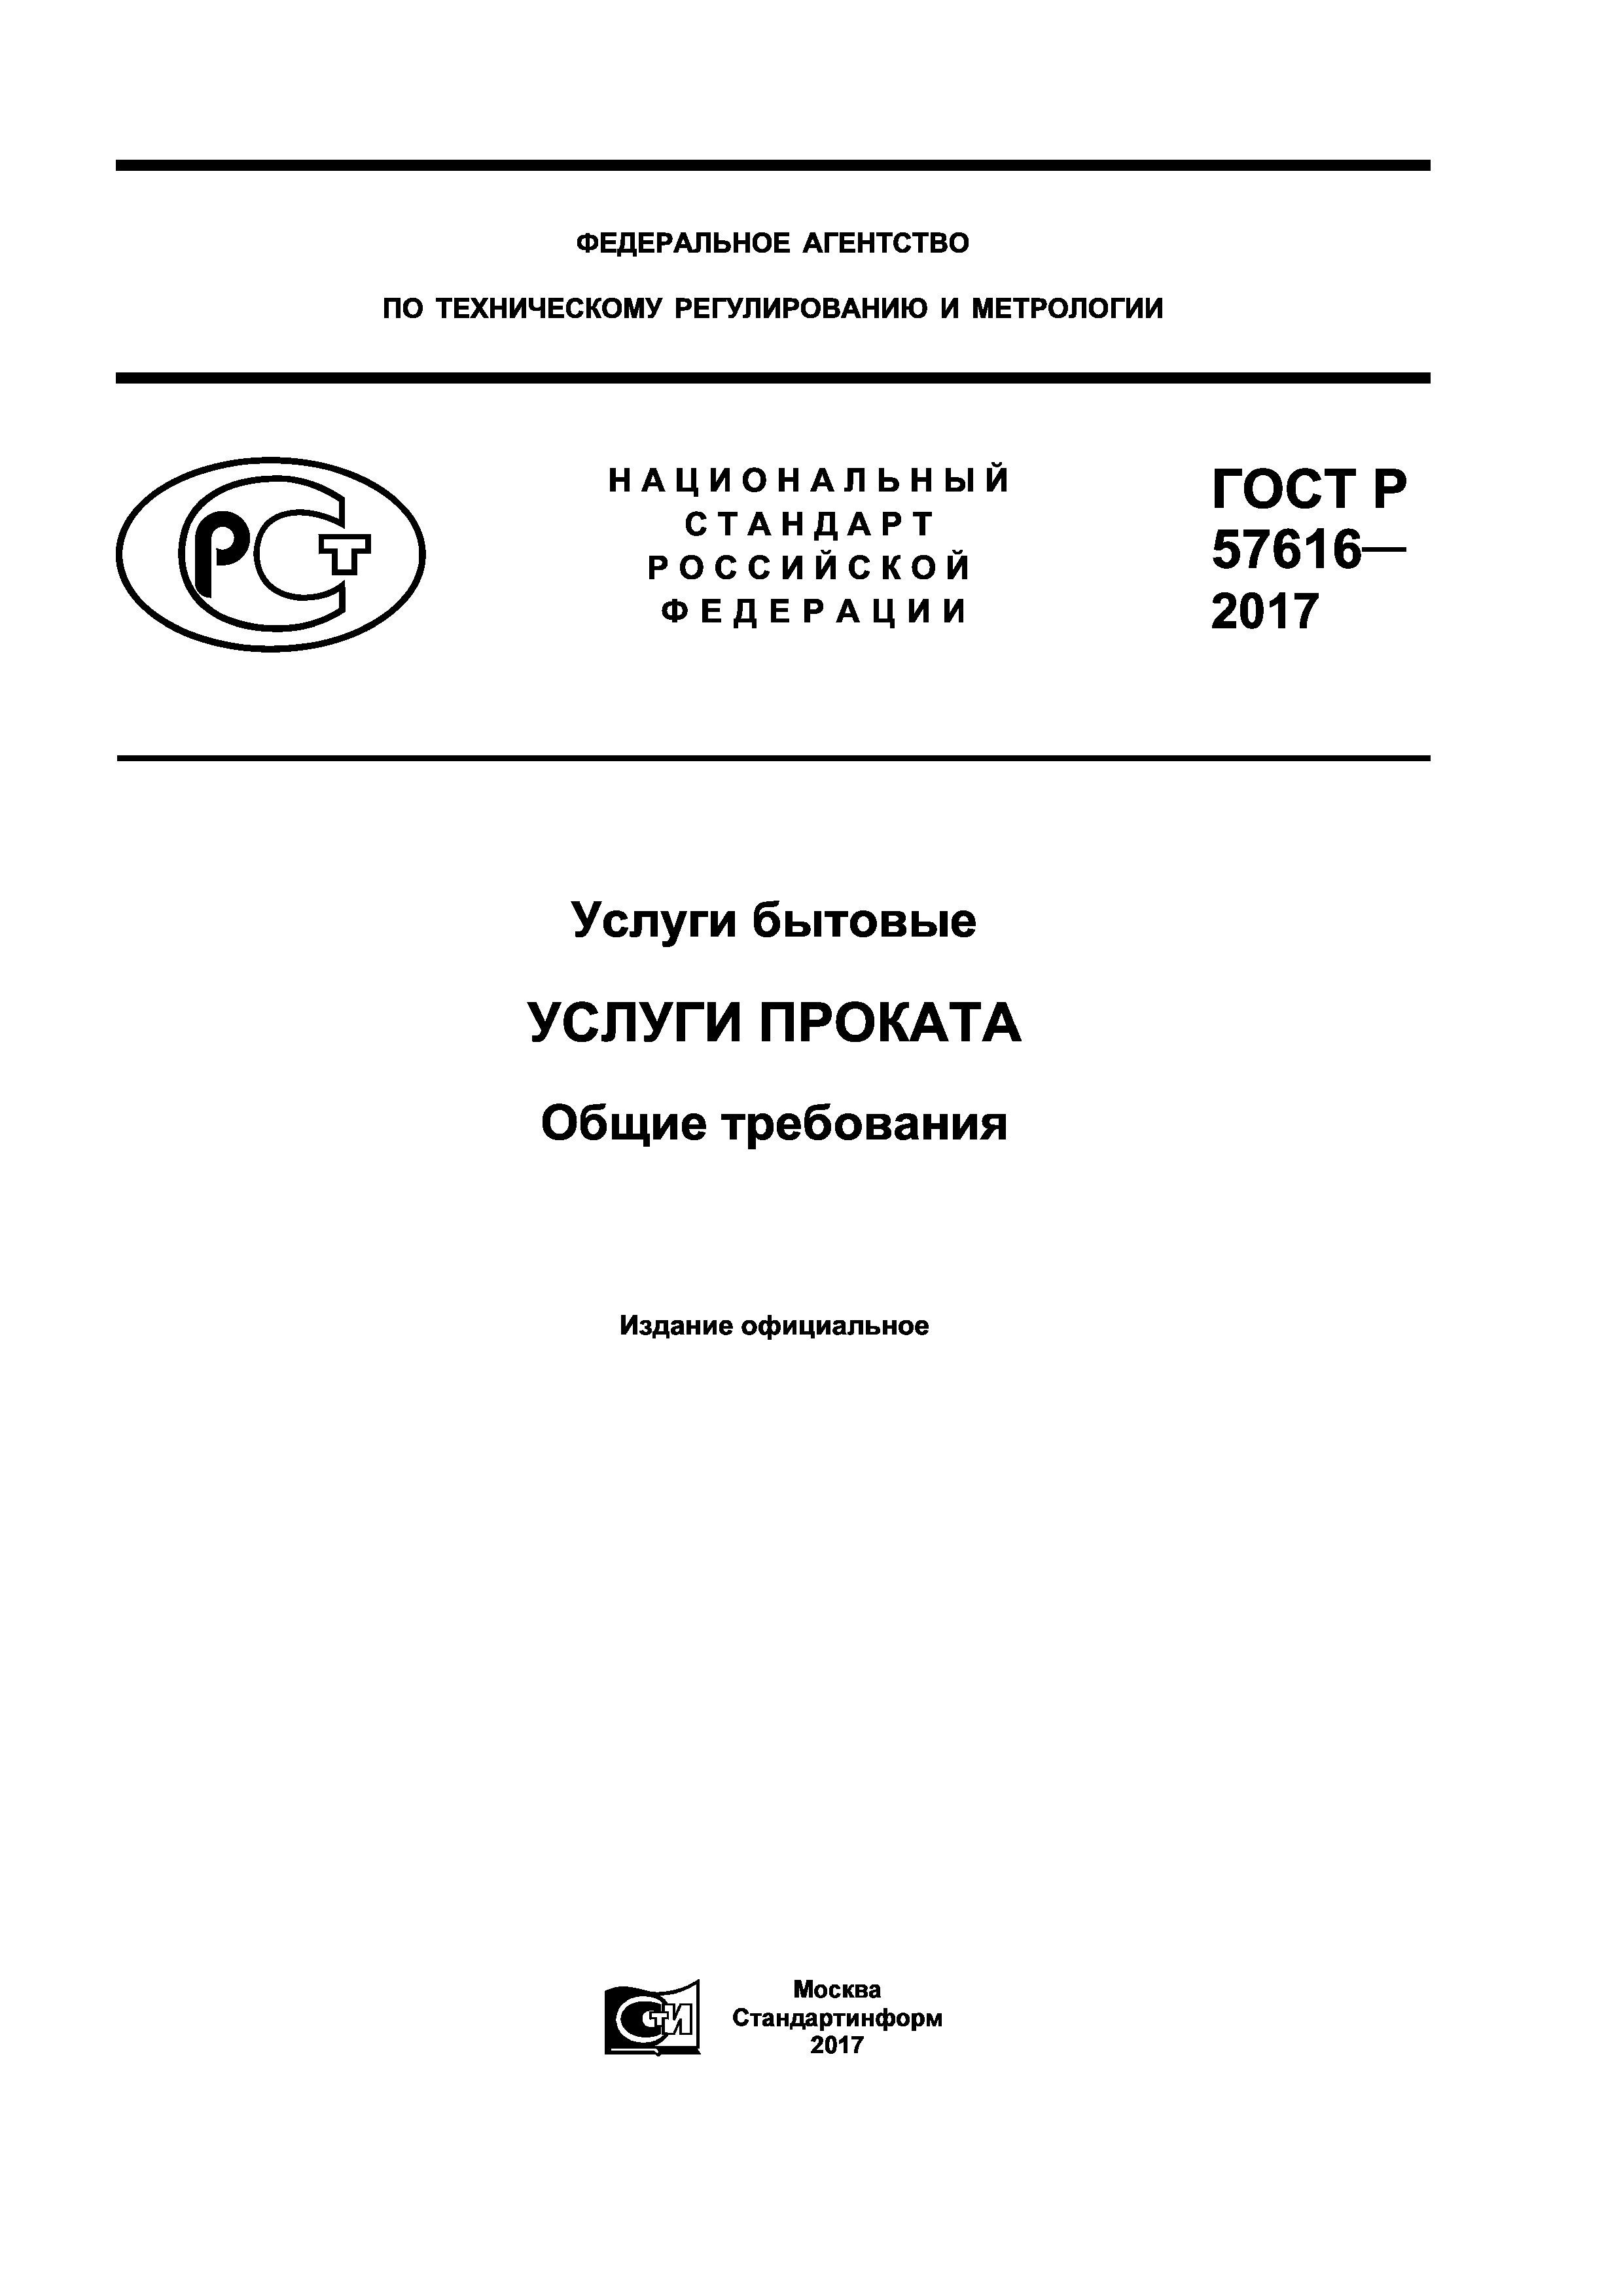 ГОСТ Р 57616-2017